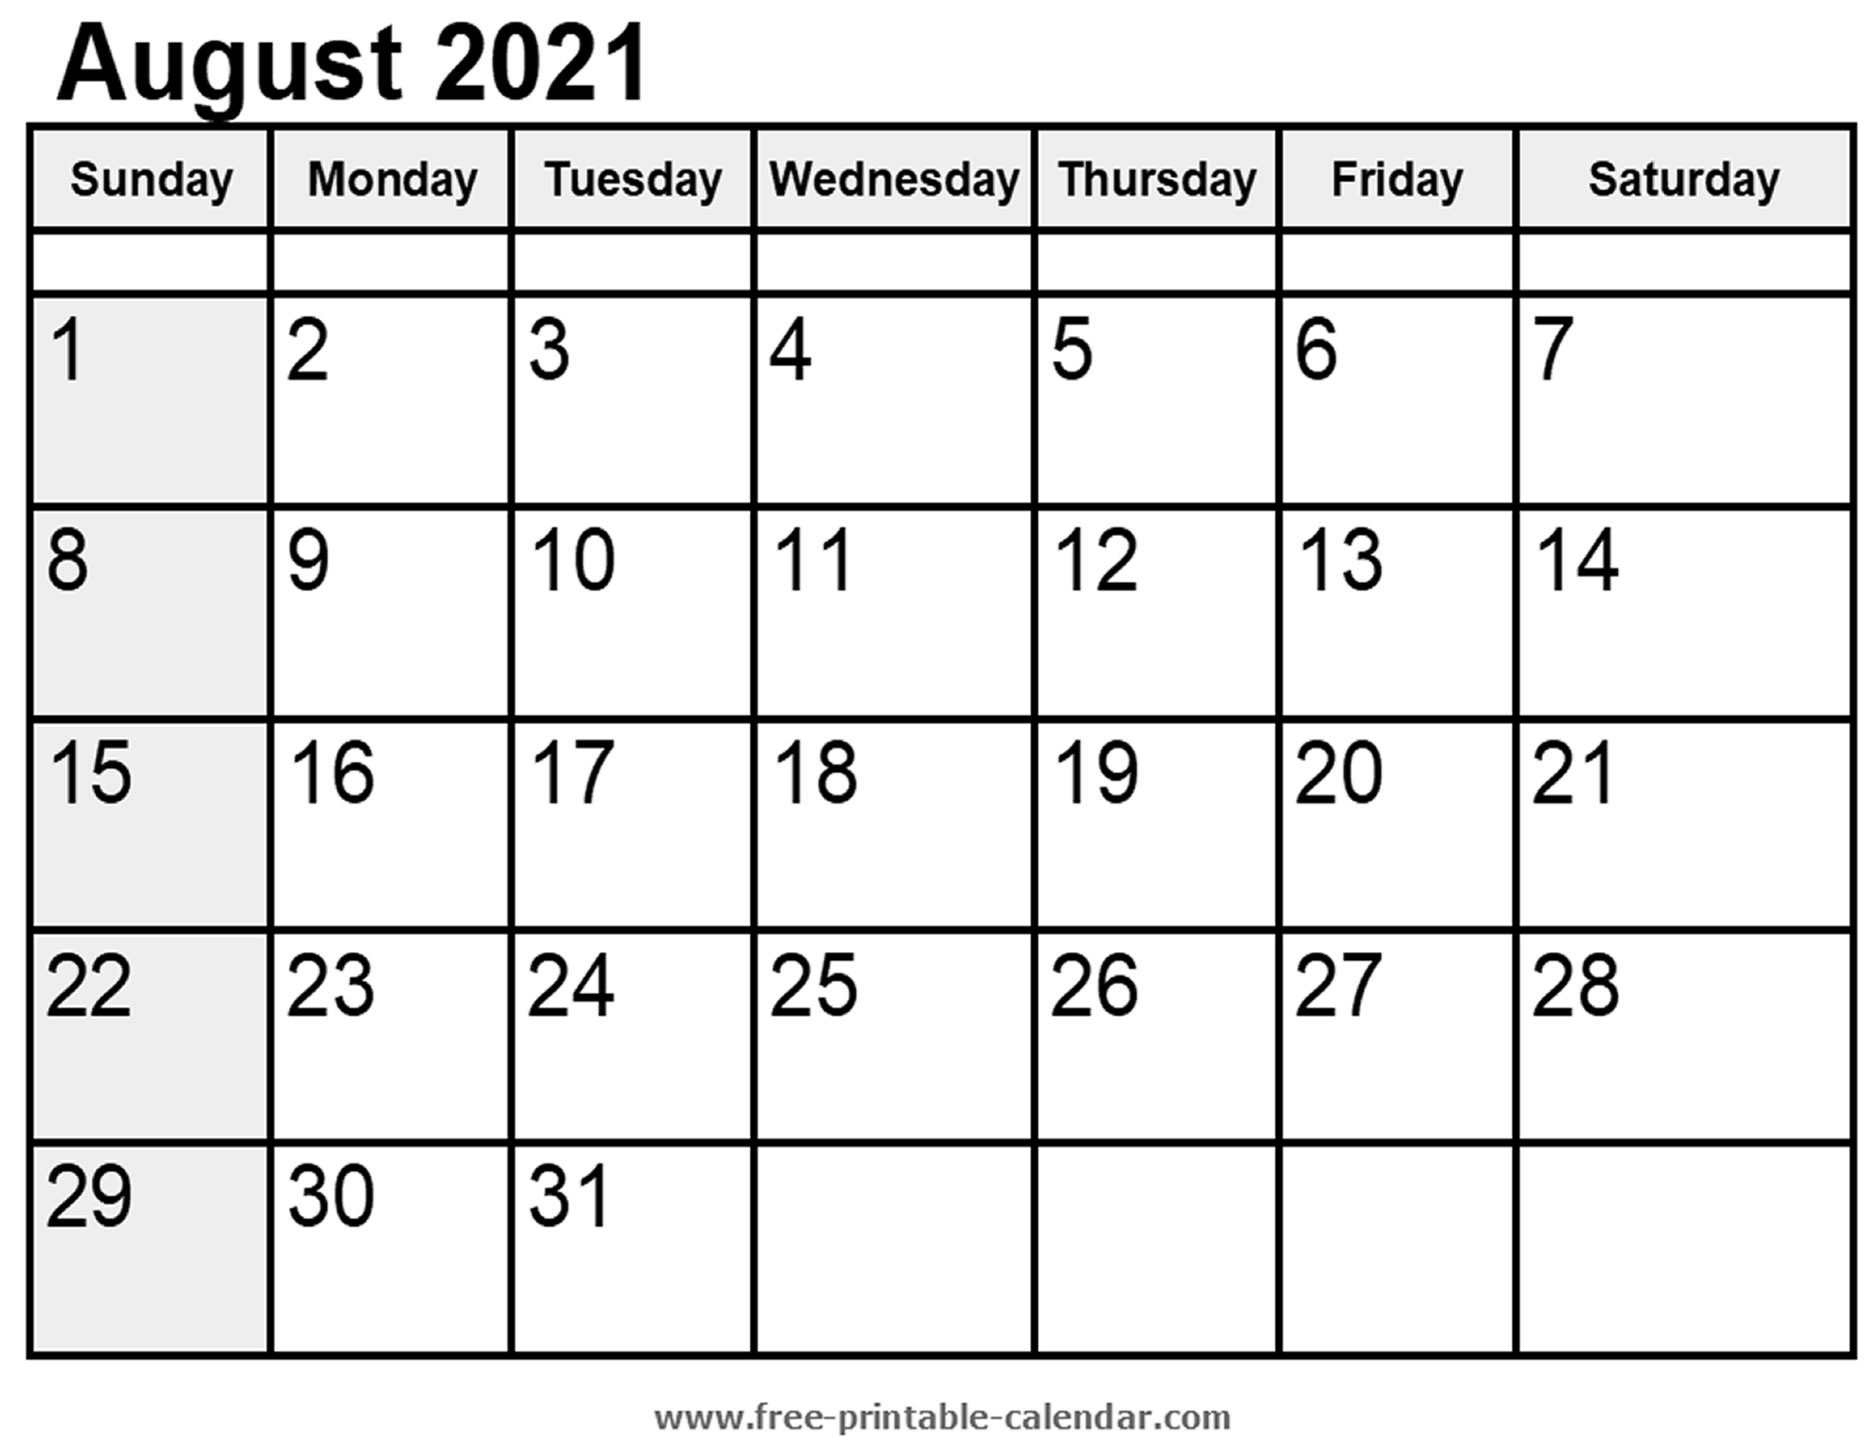 Printable Calendar August 2021 : Cute Free Printable August 2021 Calendar Saturdaygift - An August 2021 Calendar Saturdaygift